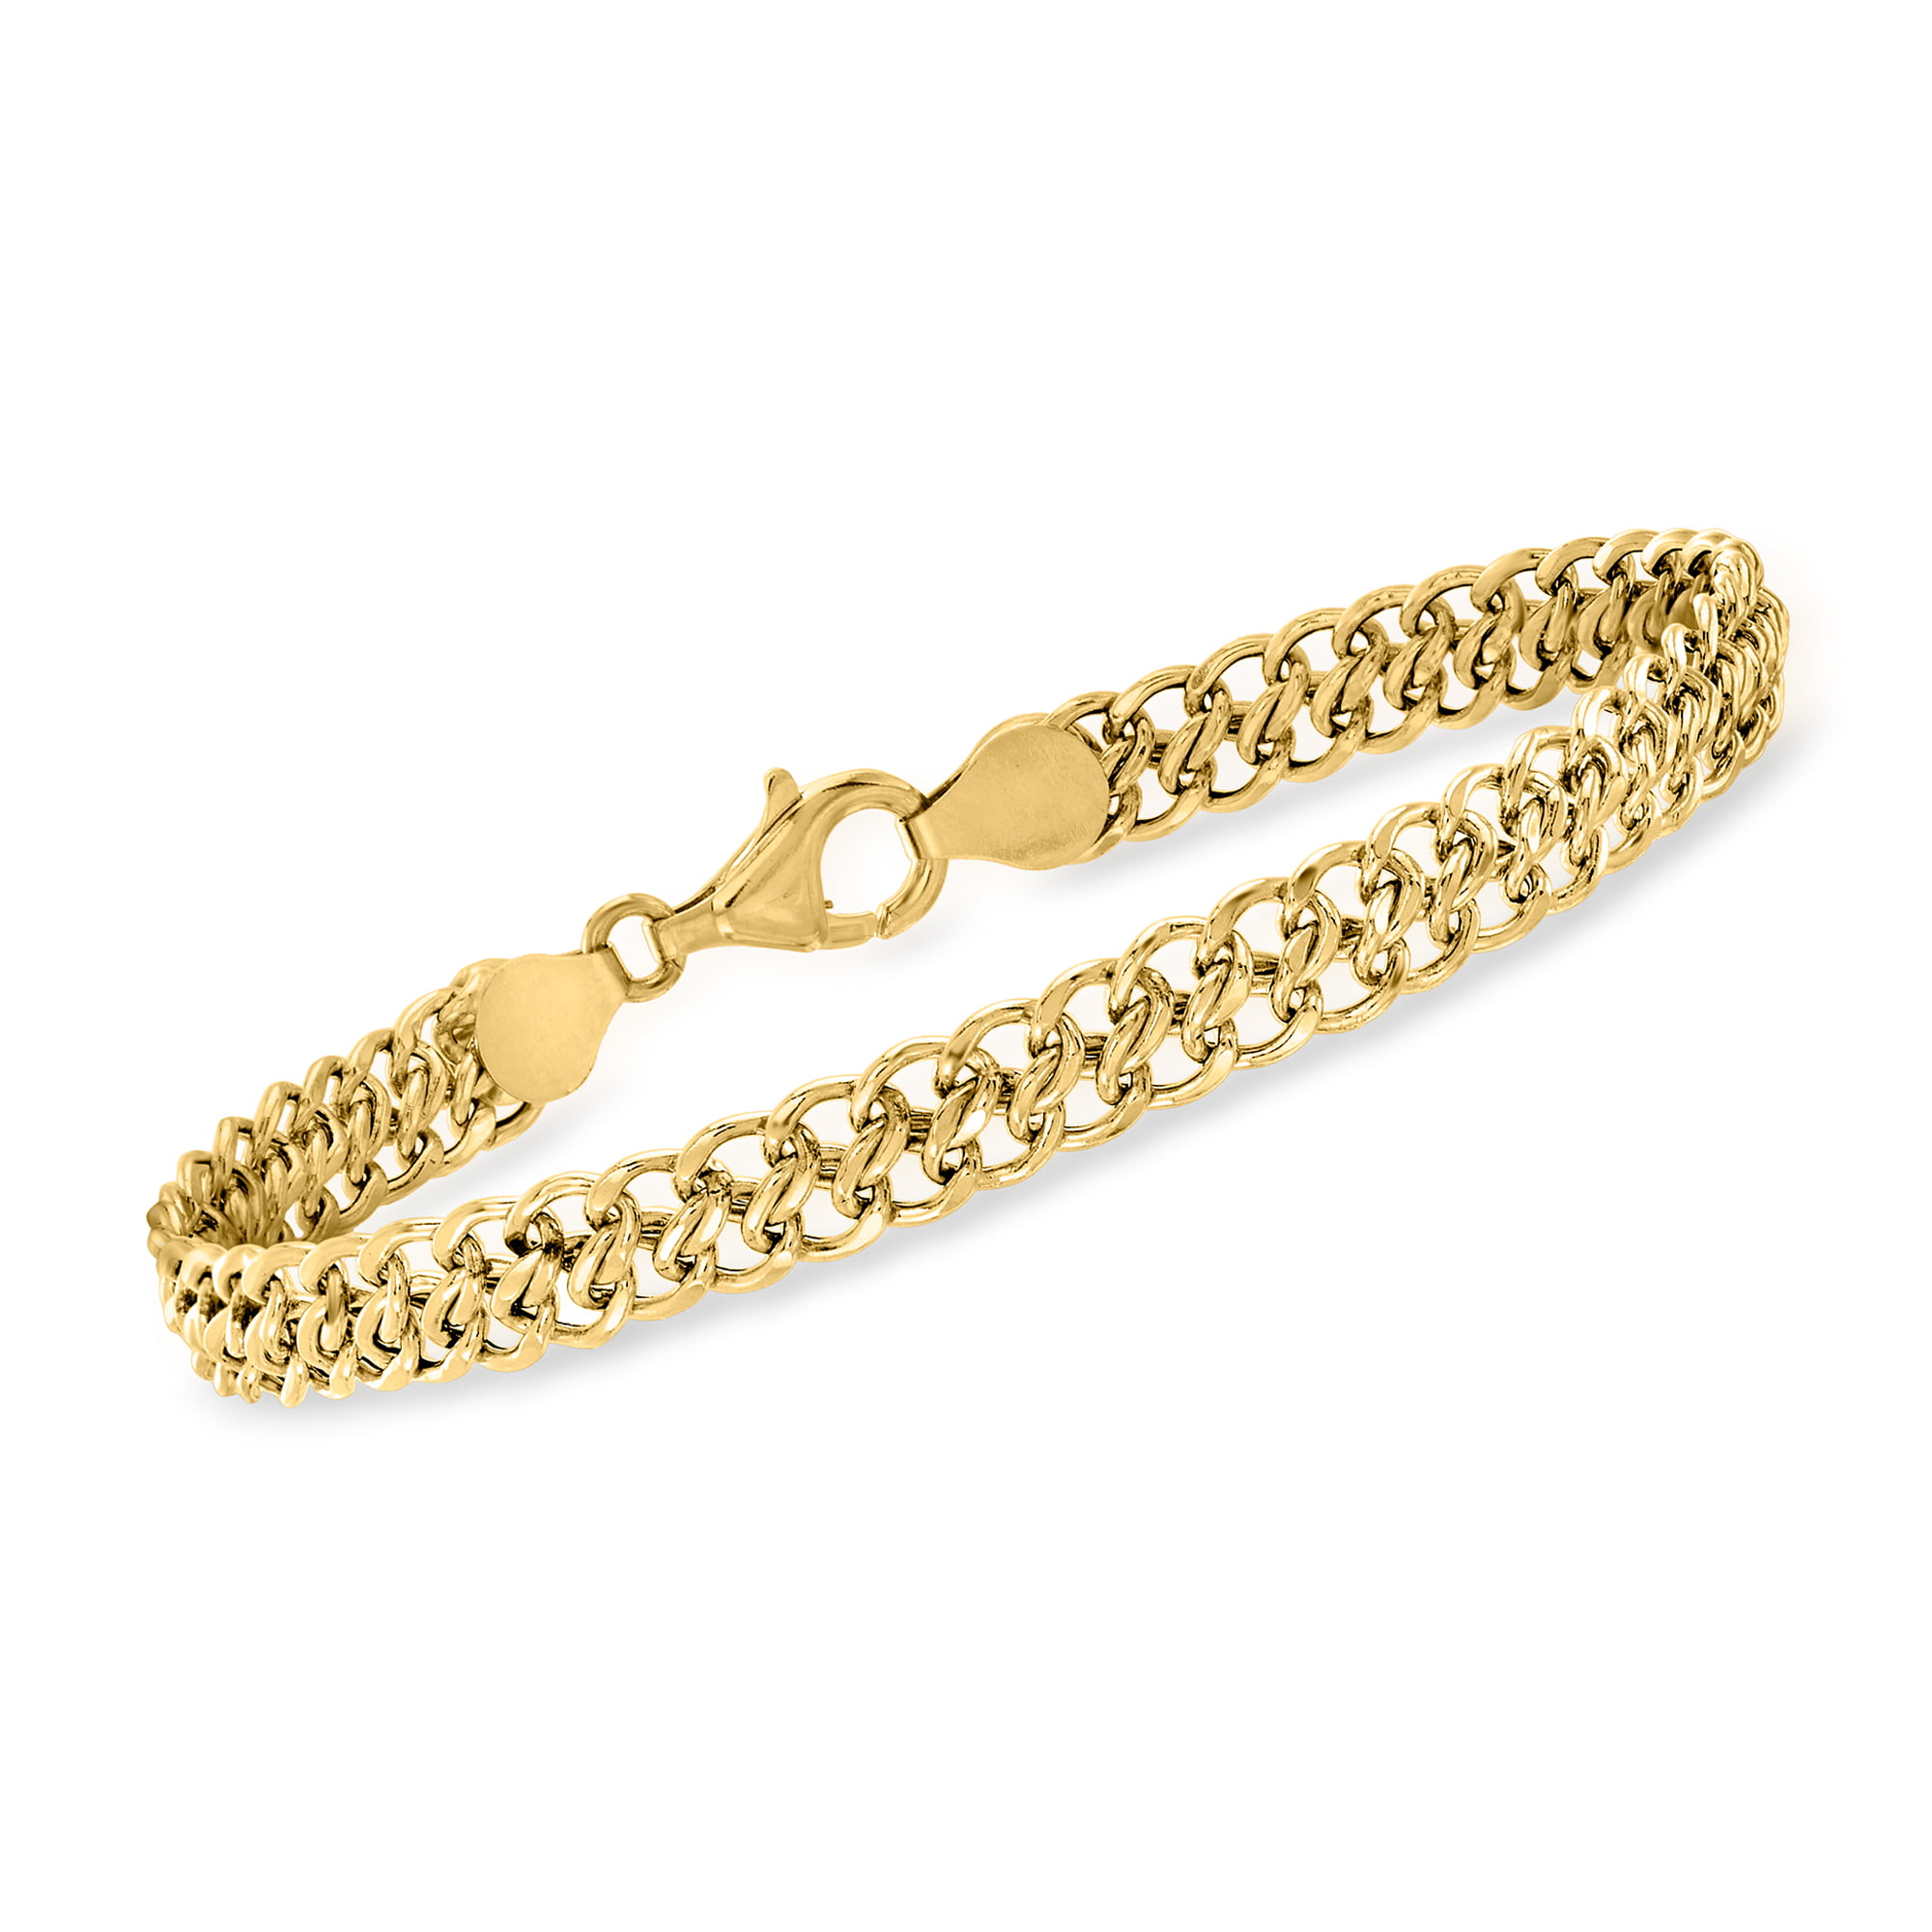 Vintage Van Cleef & Arpels 18K Yellow Gold Diamond Bangle Bracelet | eBay